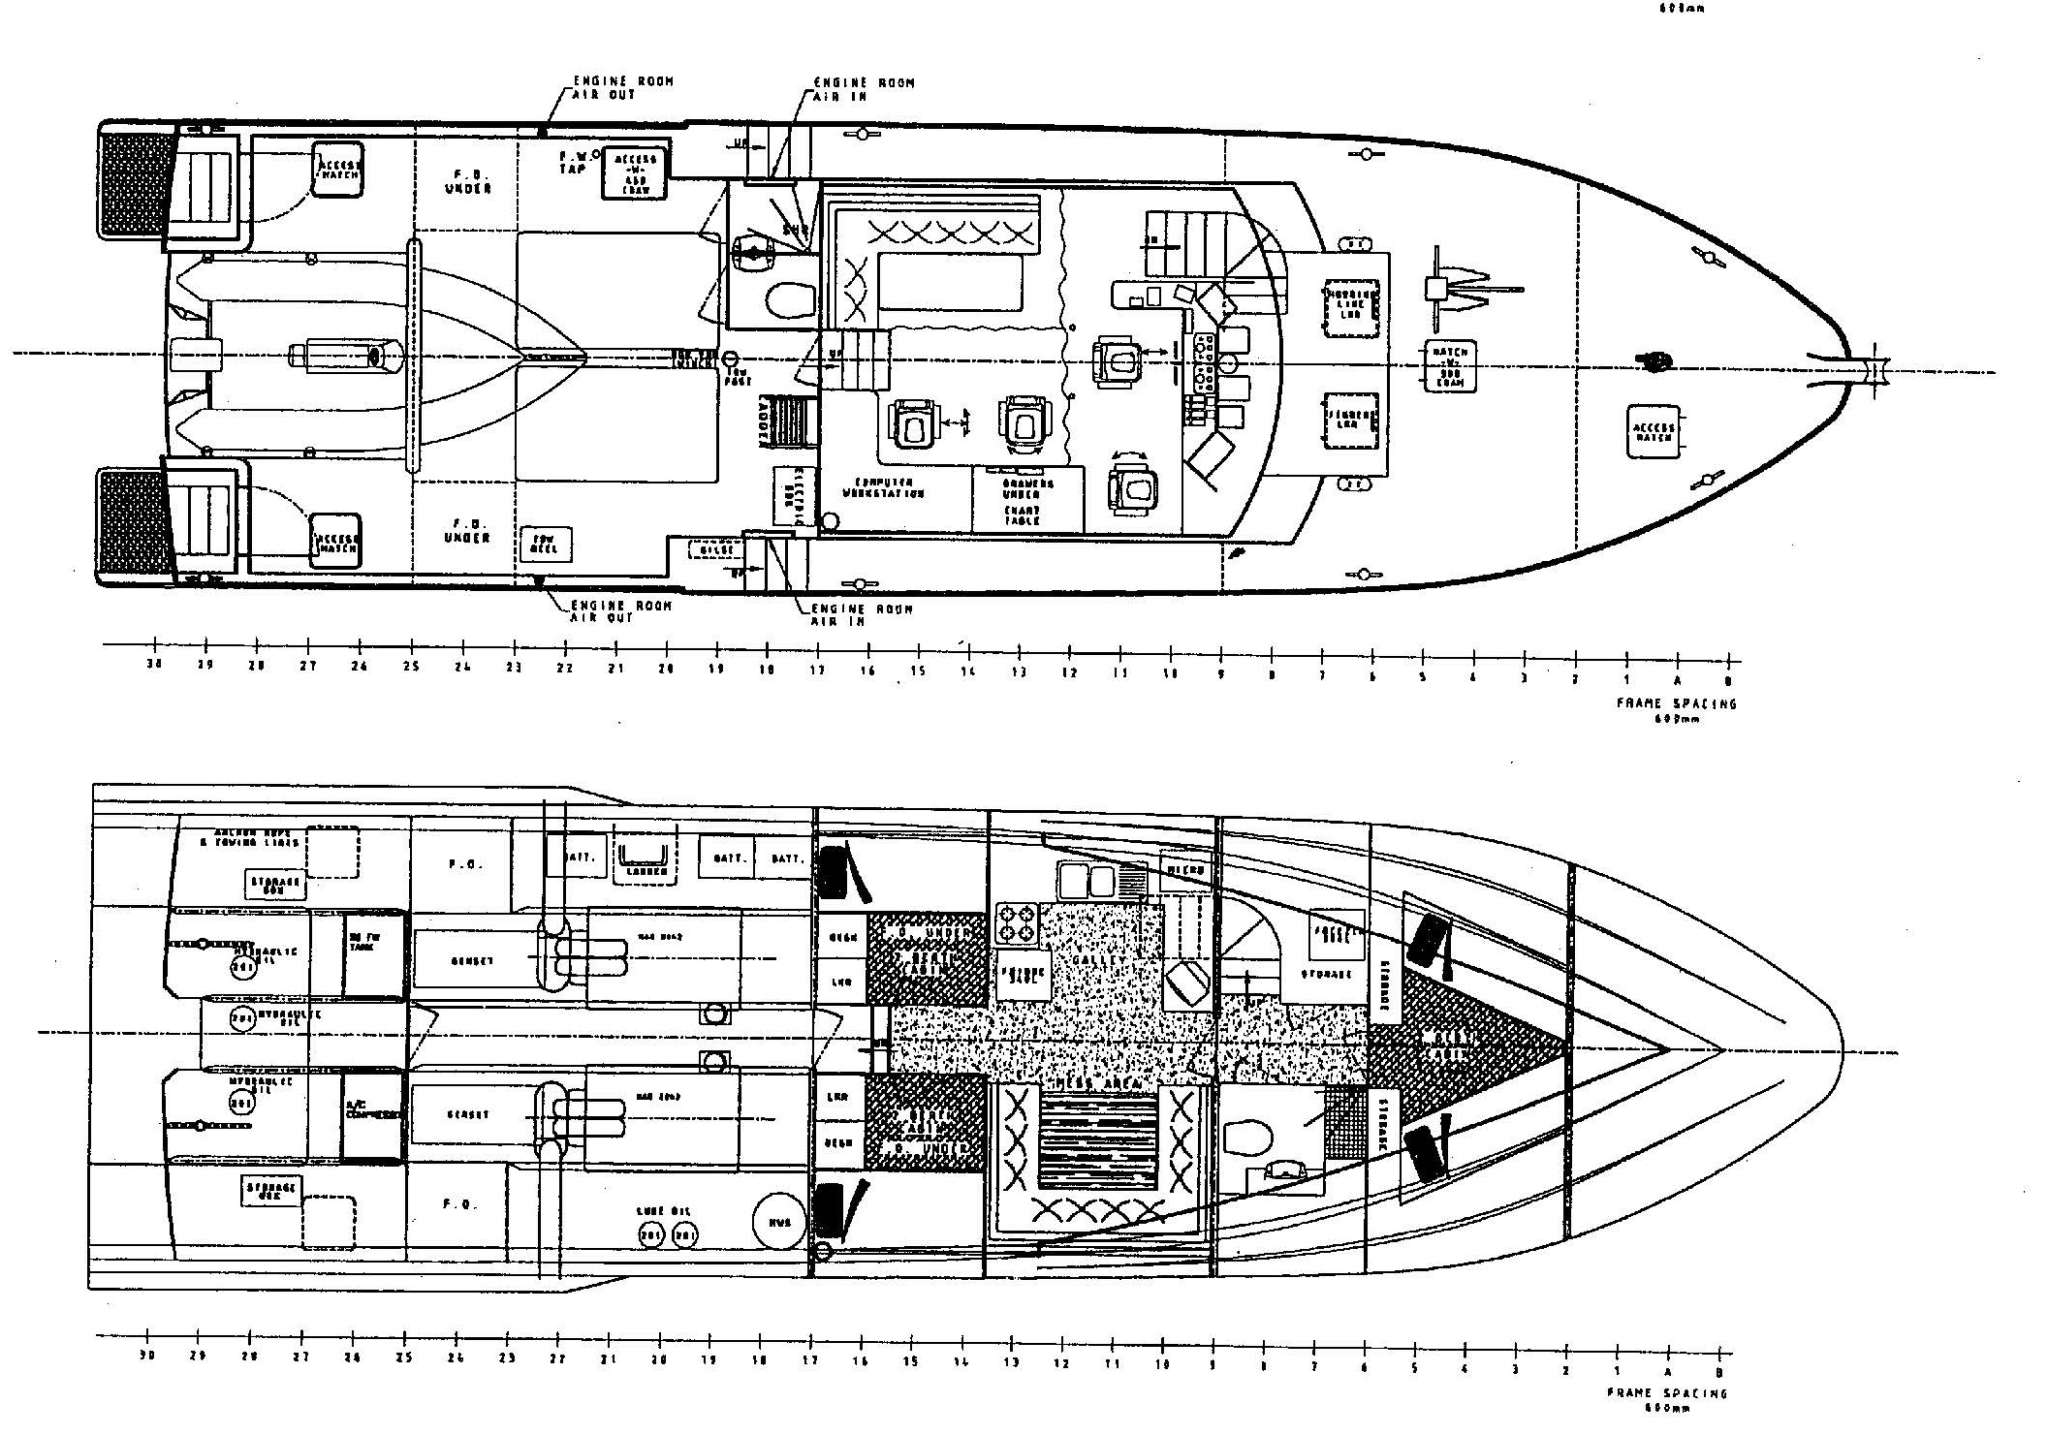 Fast Crewboat / Utility Vessel